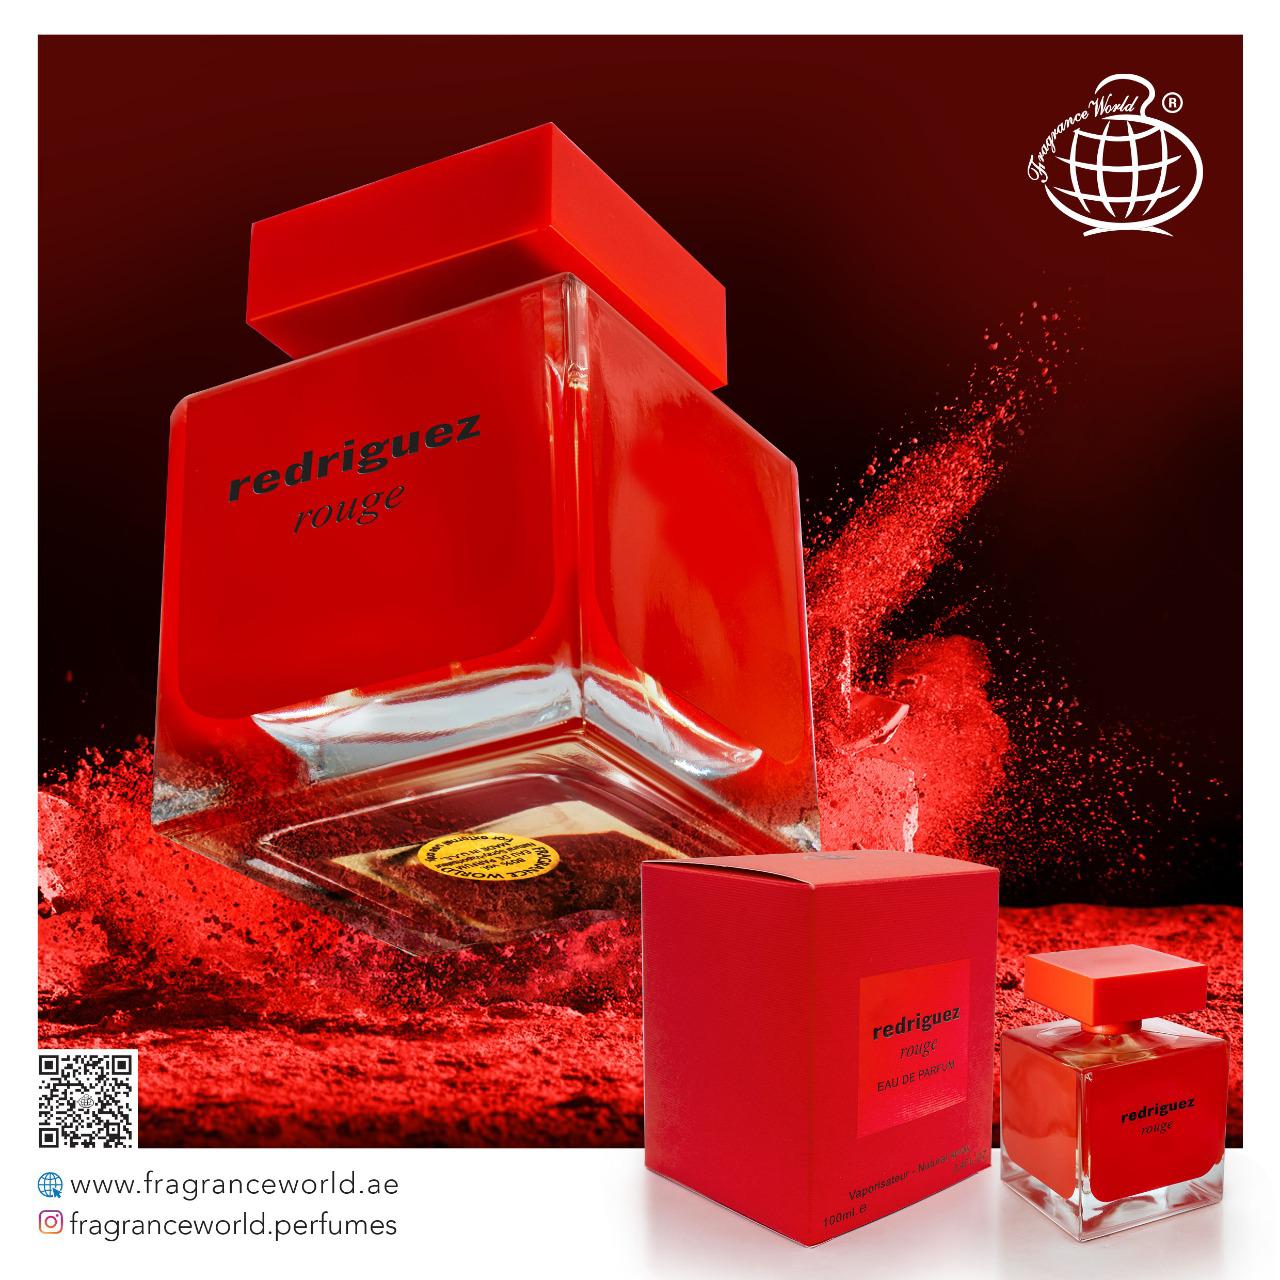 Fragrance World - Redriguez Rouge